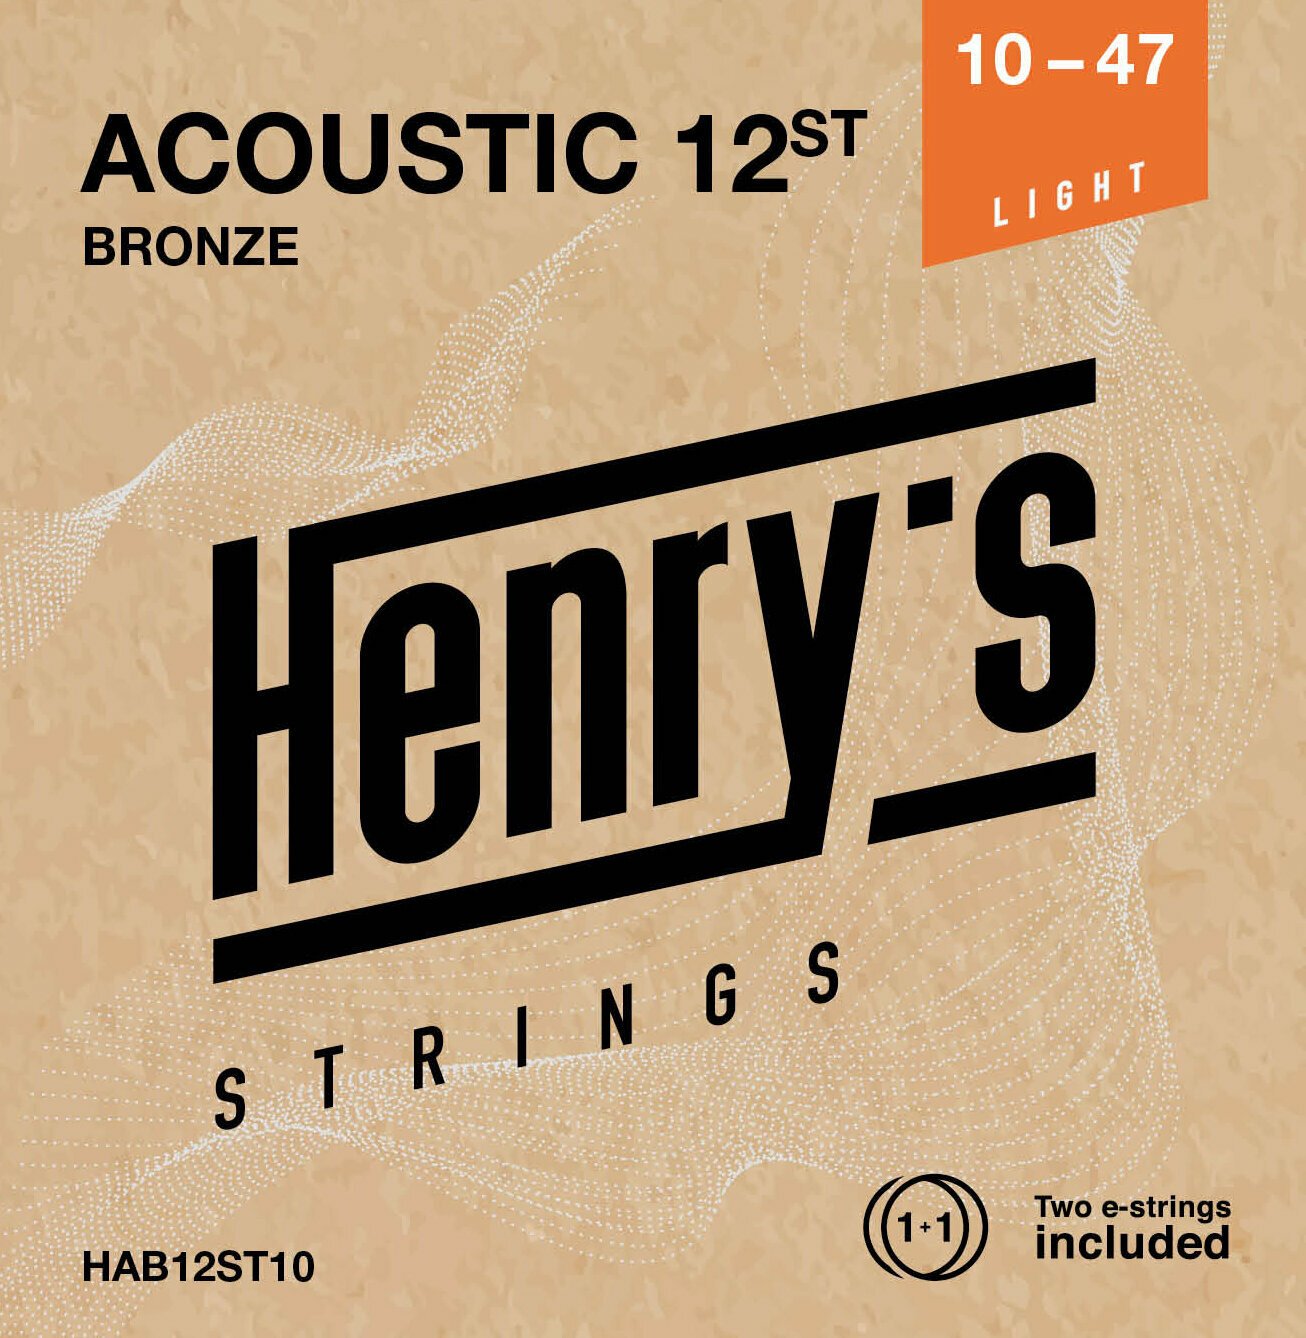 Guitarstrenge Henry's 12ST Bronze 10-47